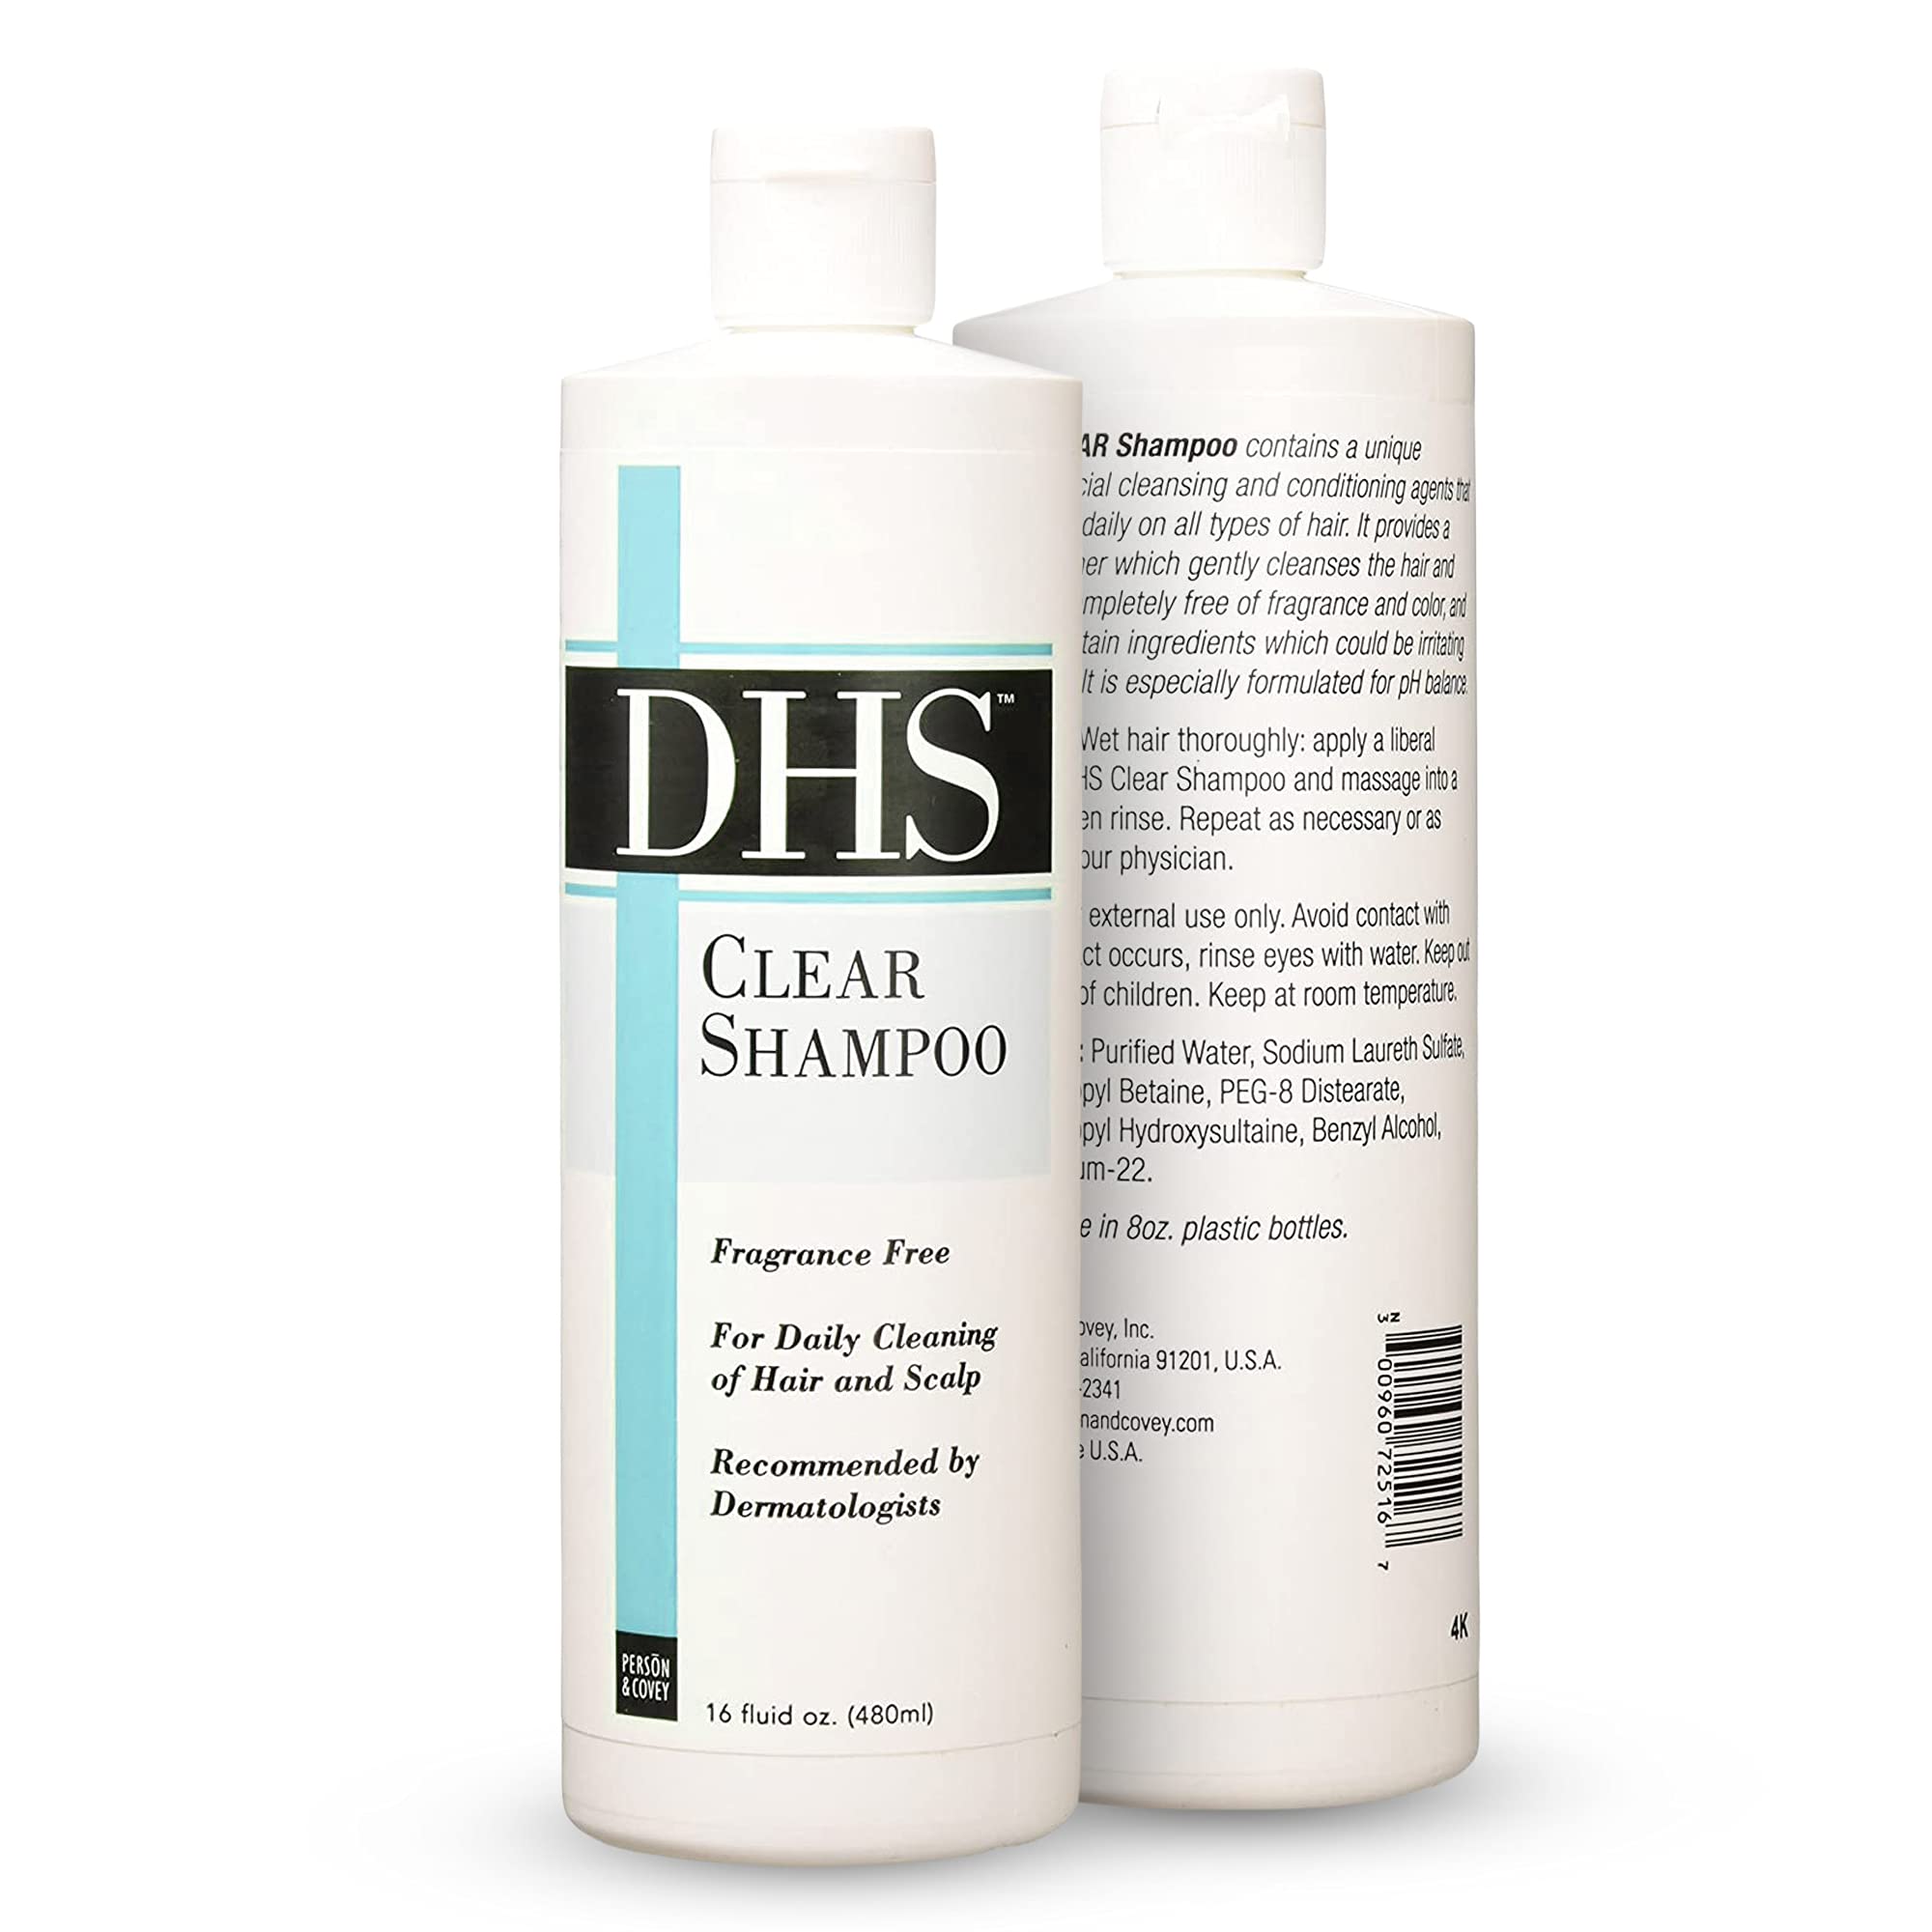 Dhs Clear Shampoo, 16 Oz